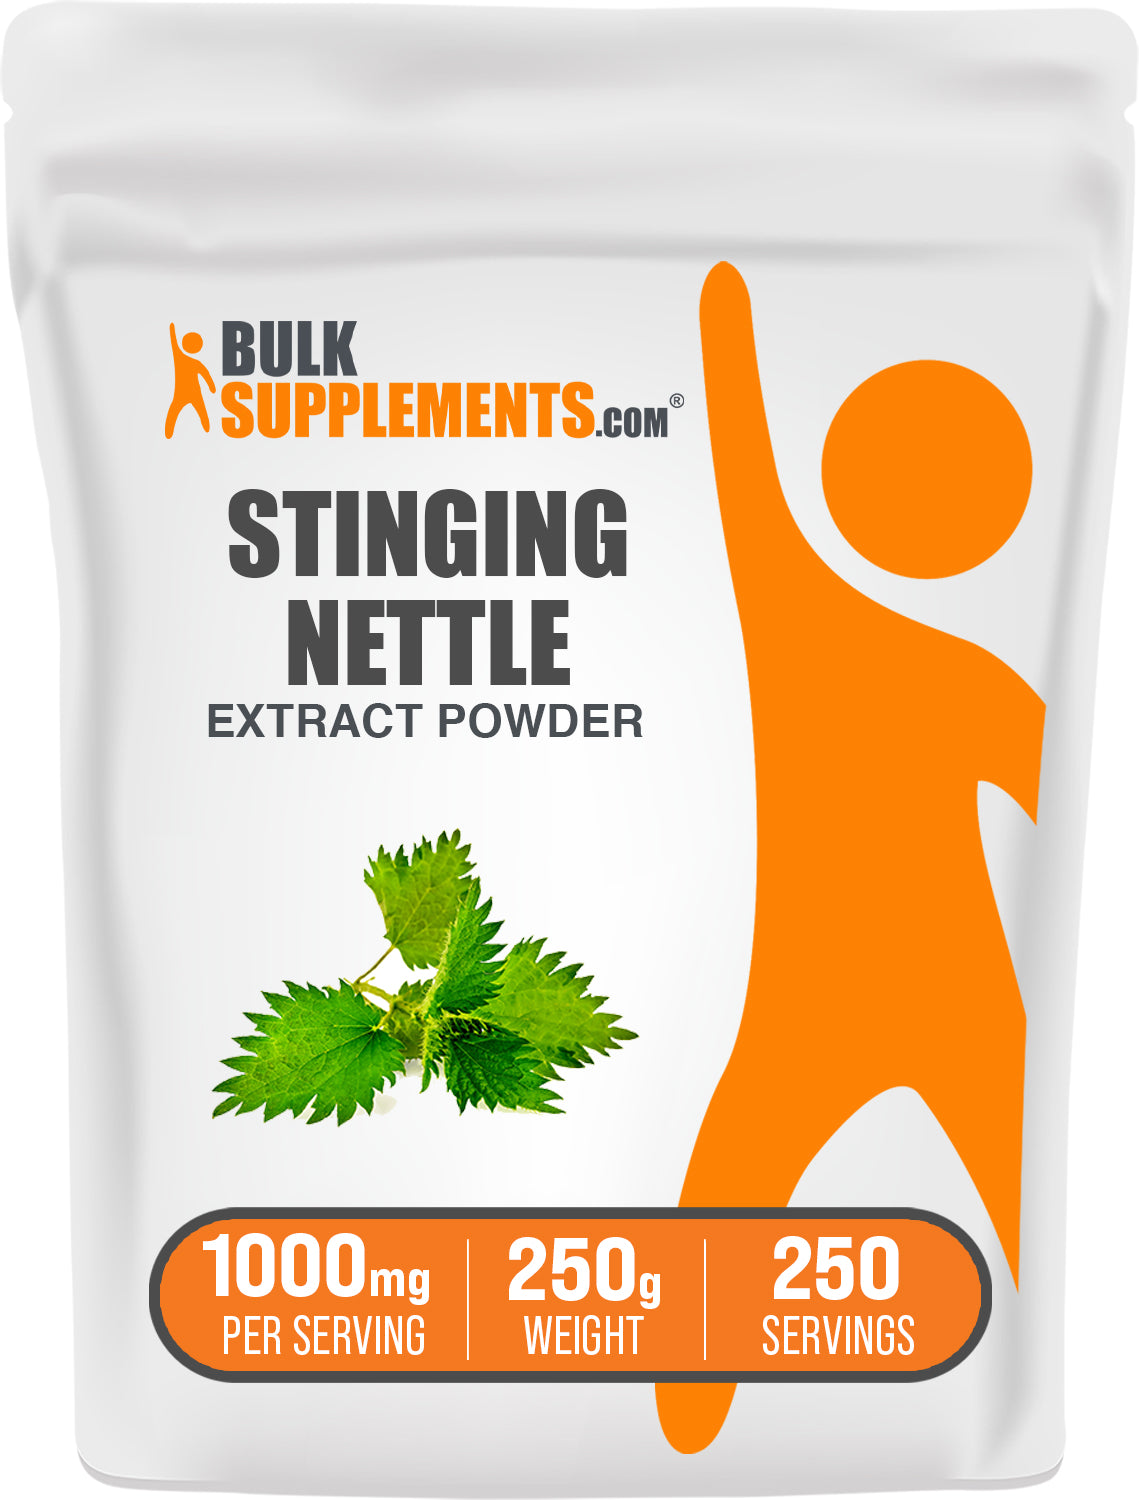 BulkSupplements.com Stinging Nettle Extract Powder 250g bag